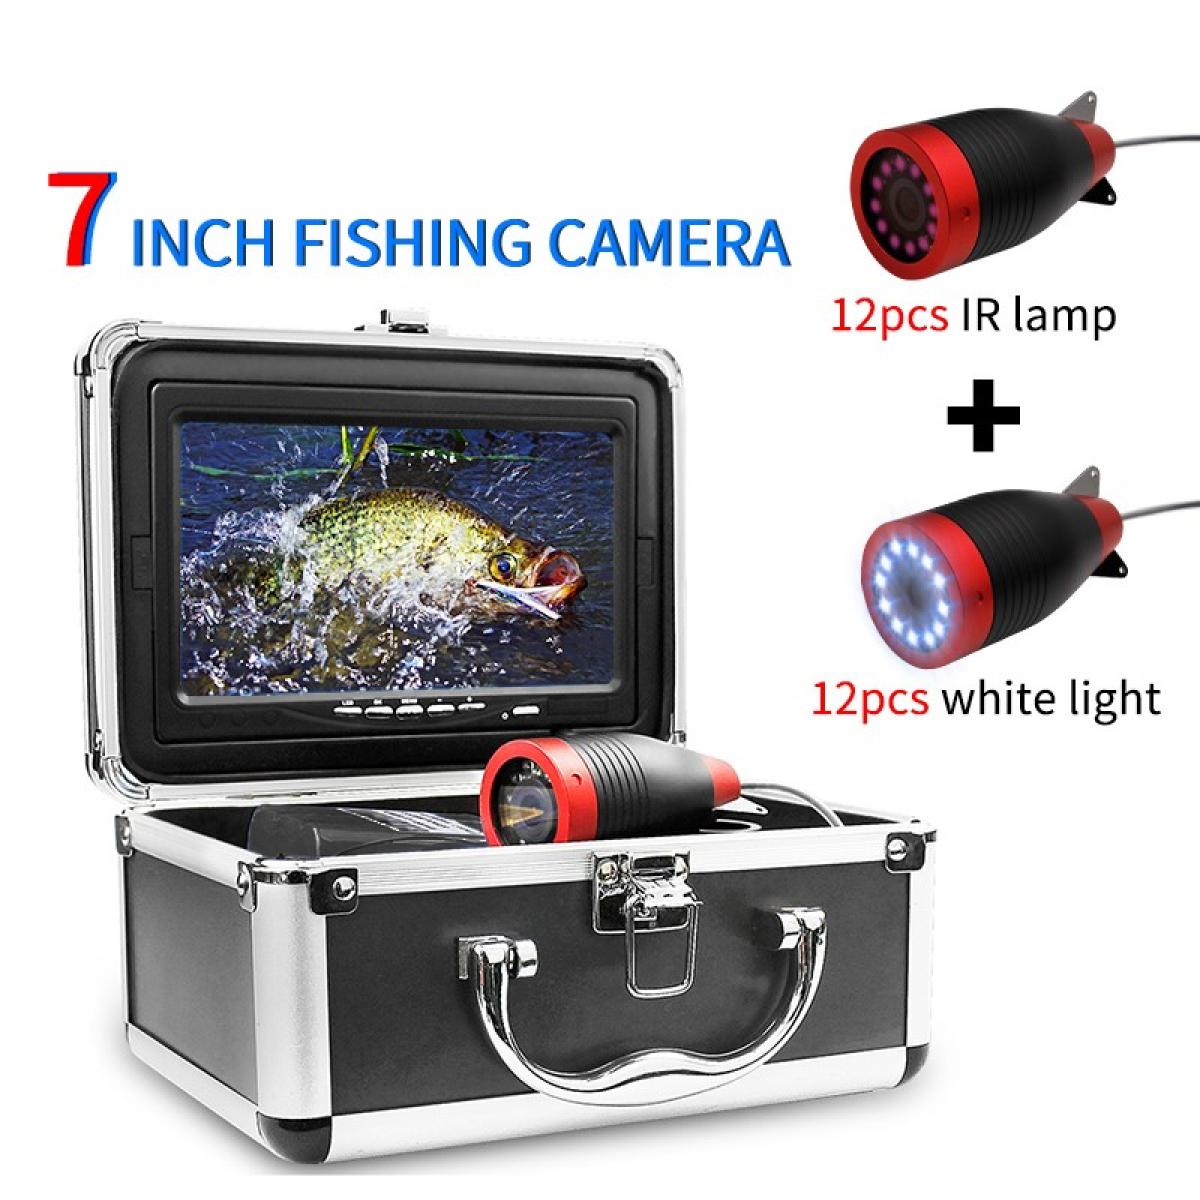  Eyoyo Underwater Fishing Camera w/DVR and Tripod